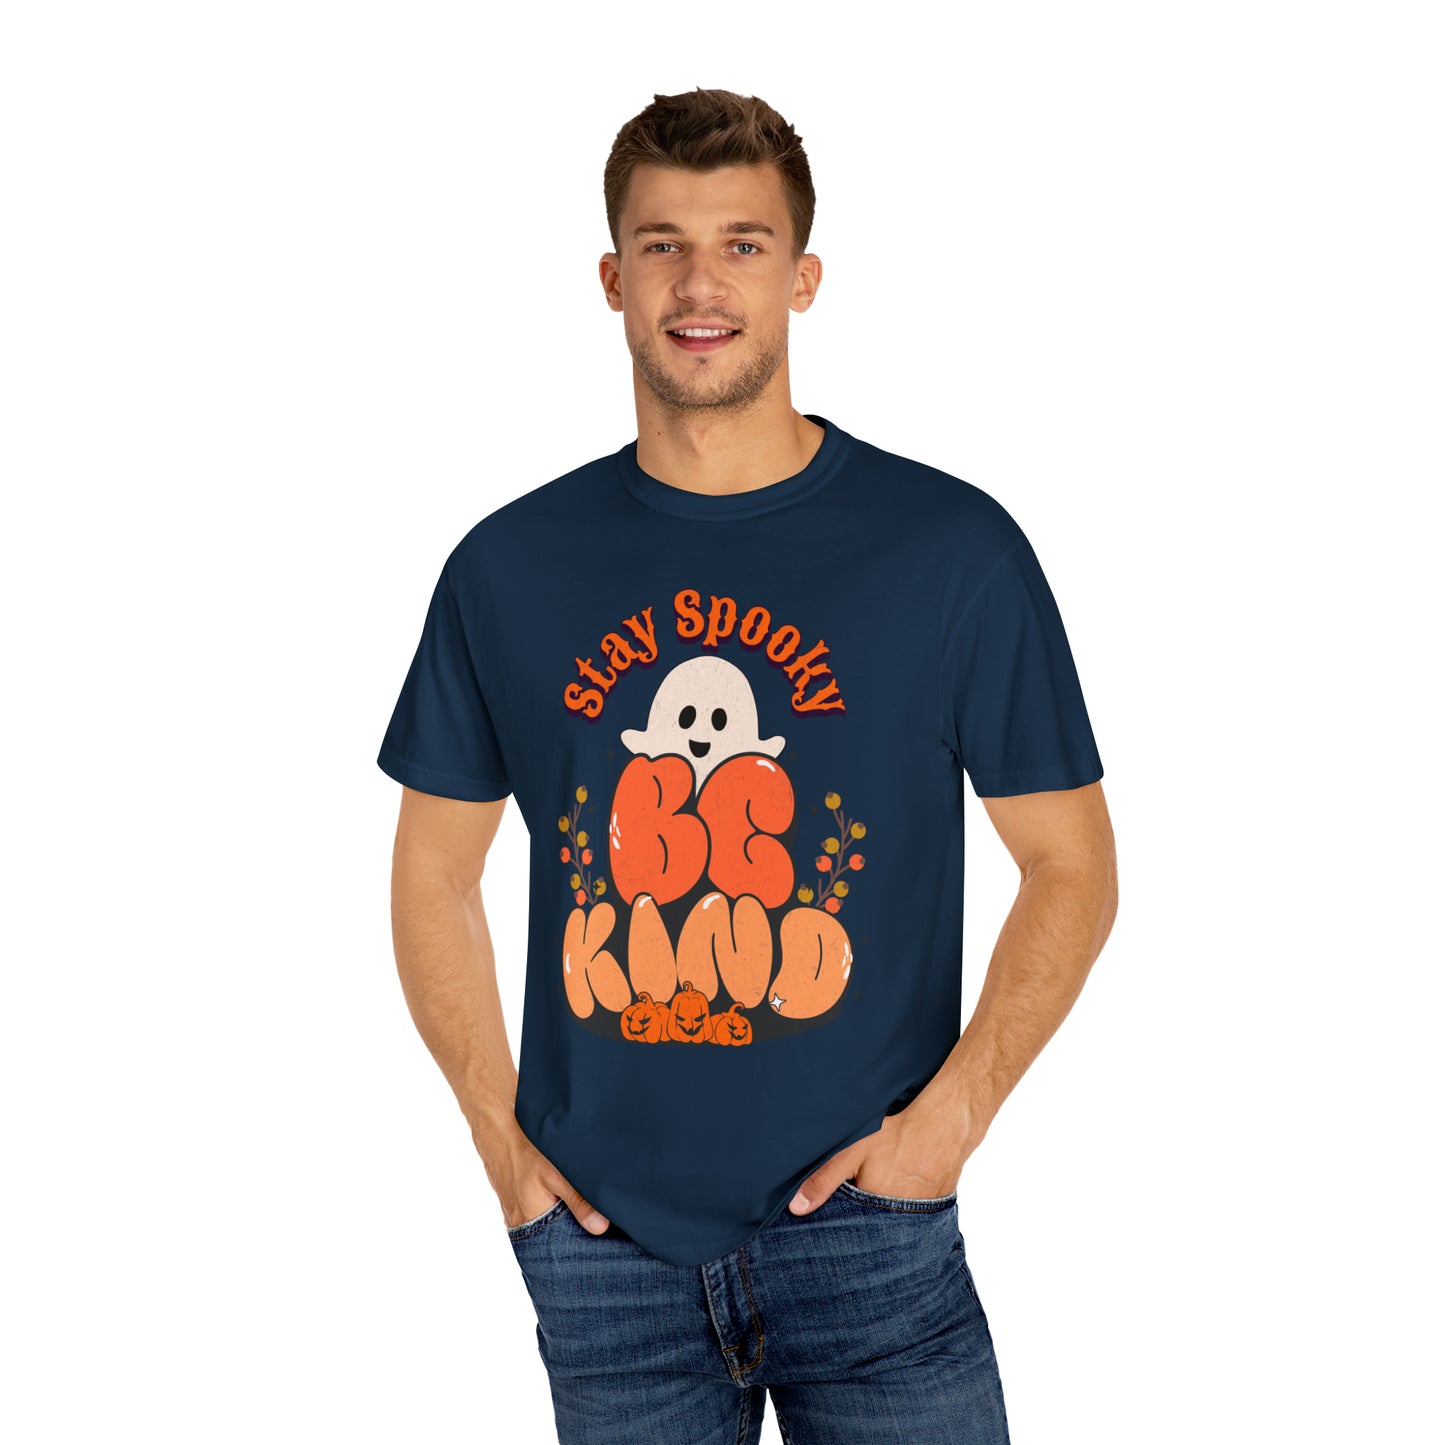 Stay Spooky Be Kind Halloween Shirt